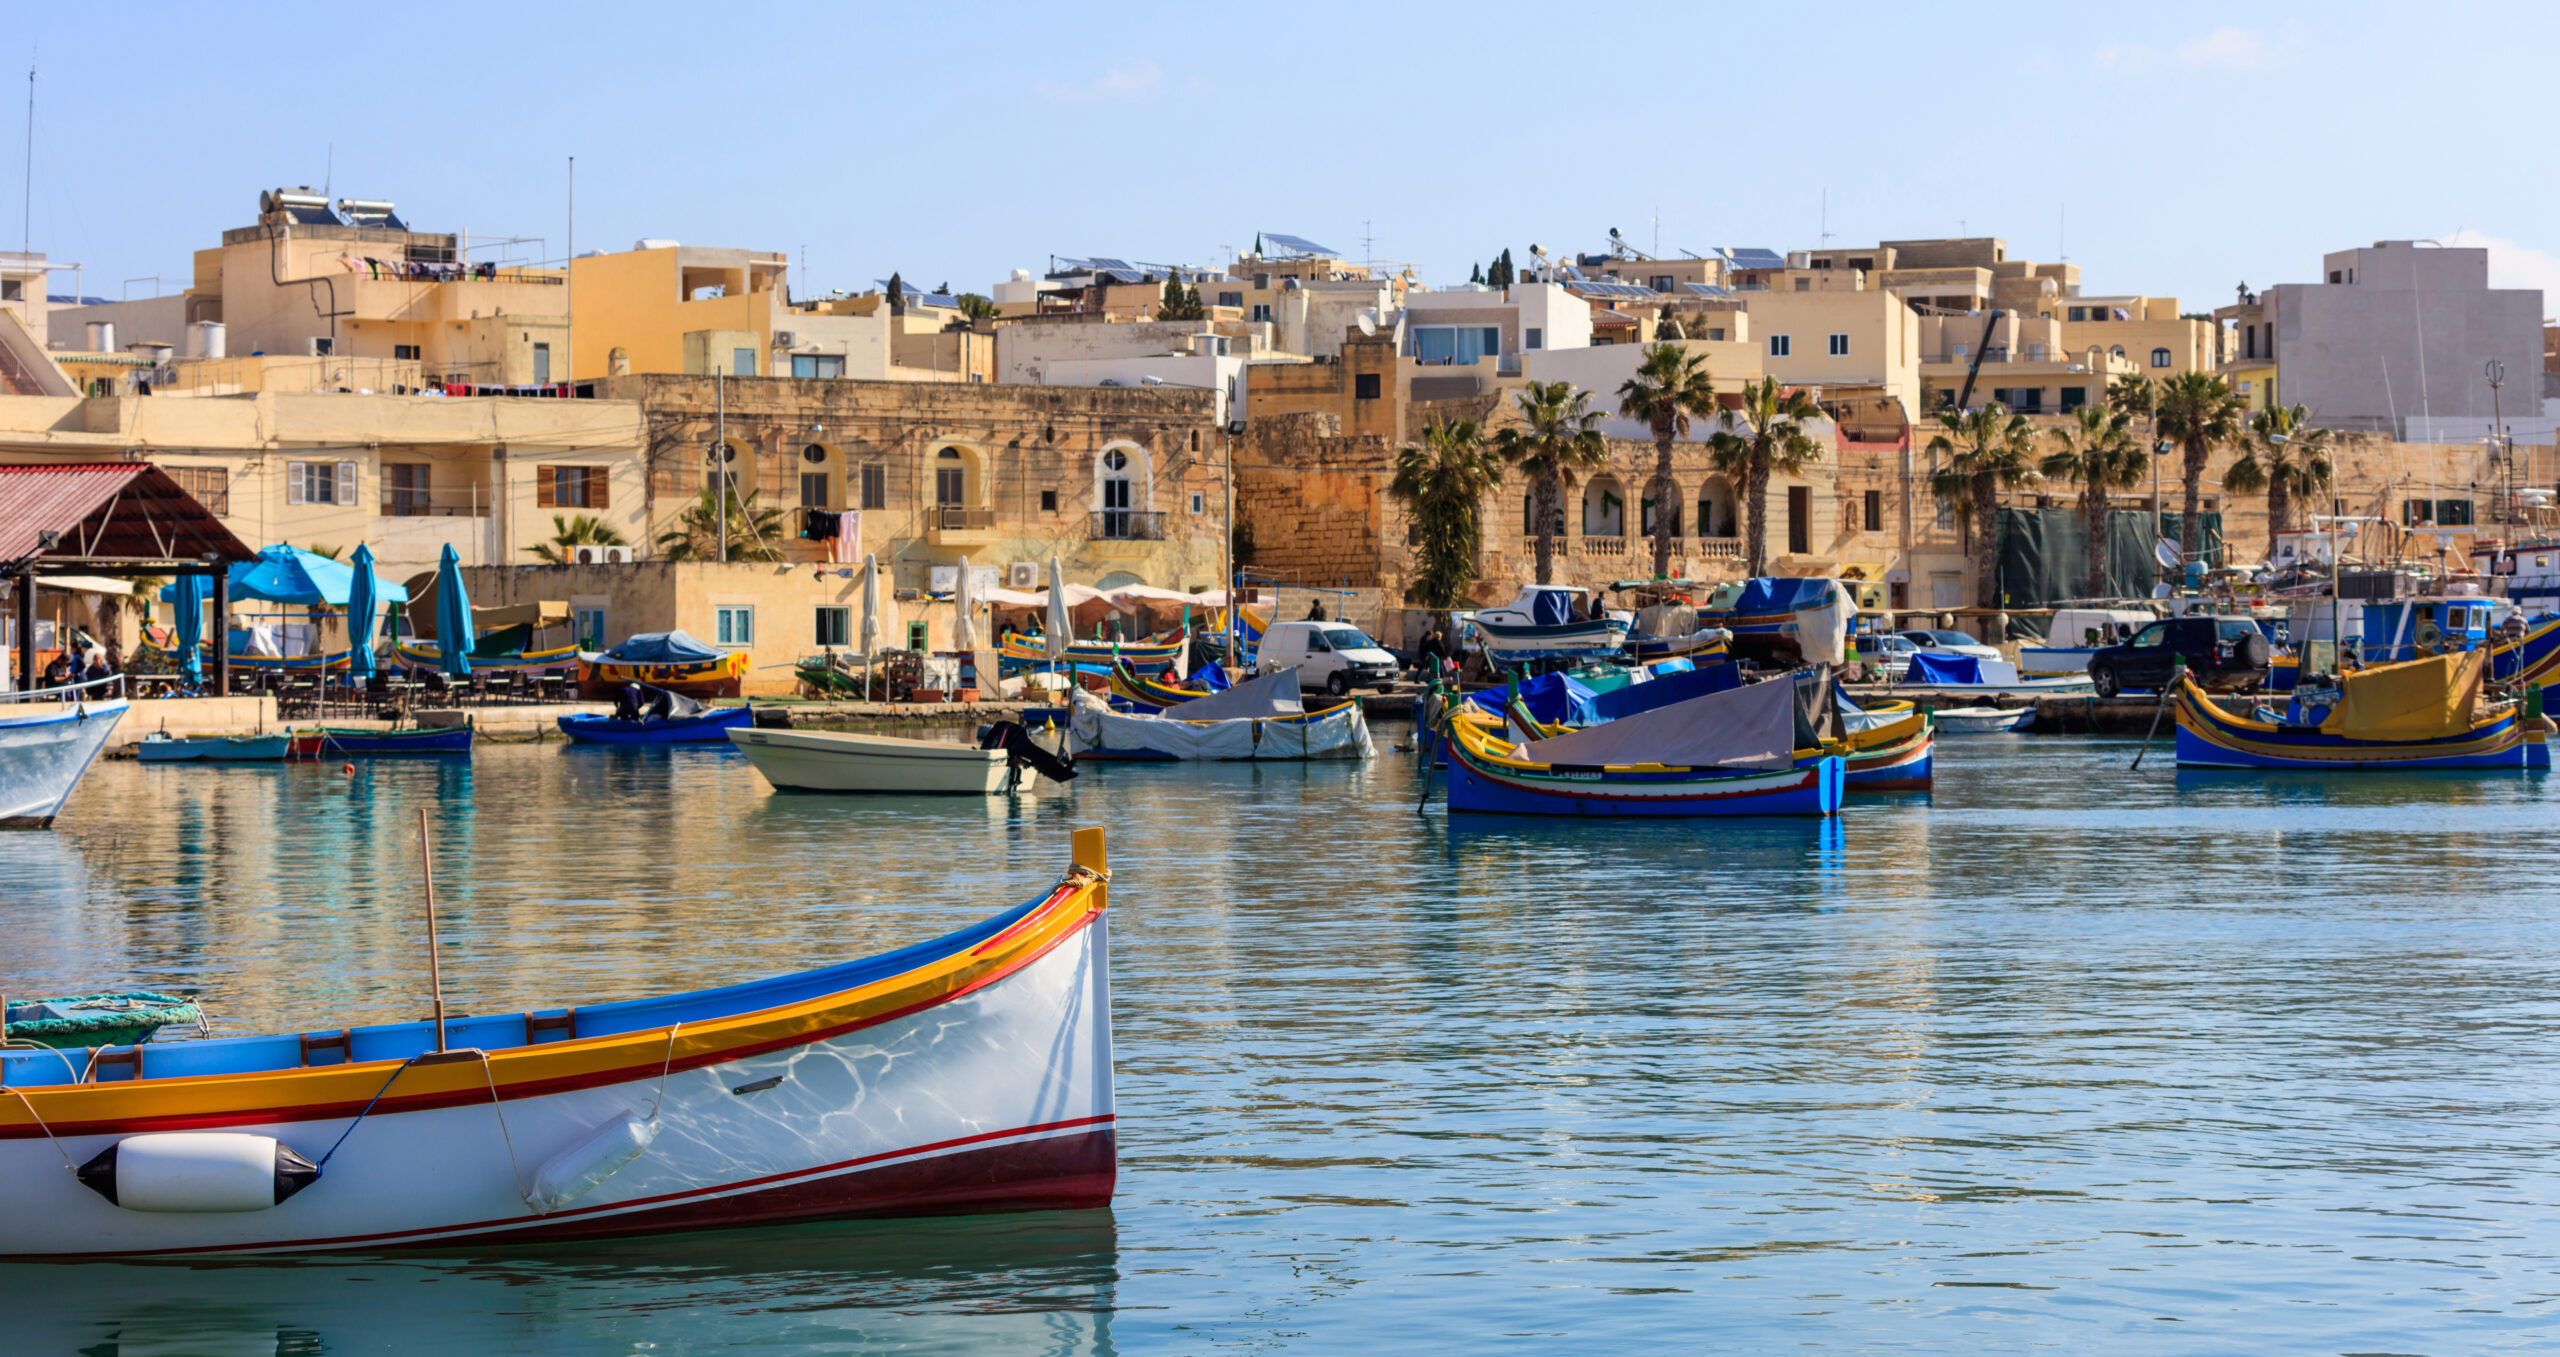 Marsaxlokk fishermen village in Malta. Traditional colorful boats at the port of Marsaxlokk